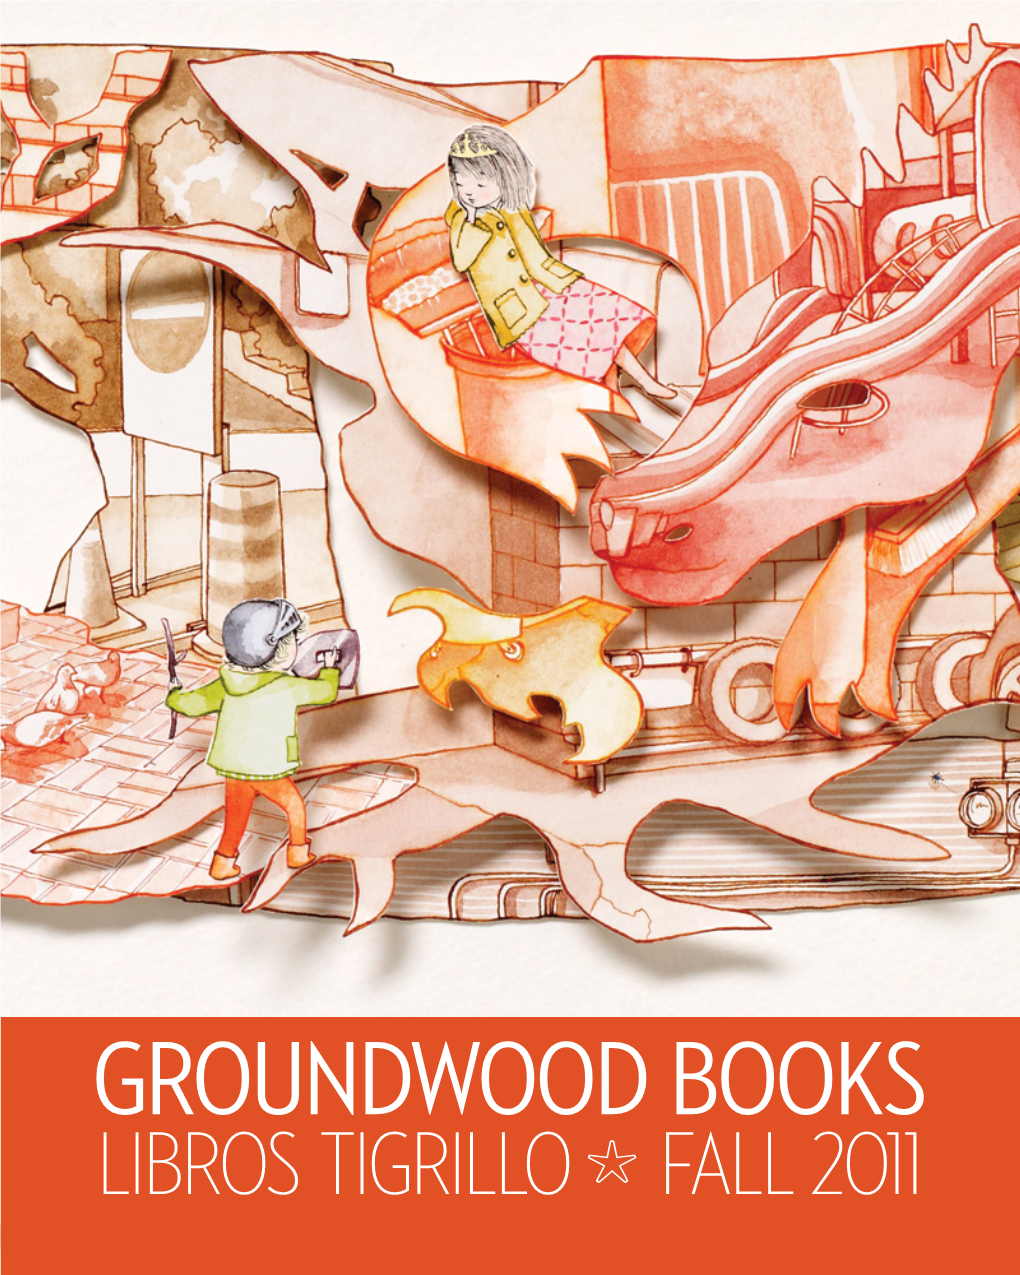 Groundwood Books Libros Tigrillo Fall 2011 September